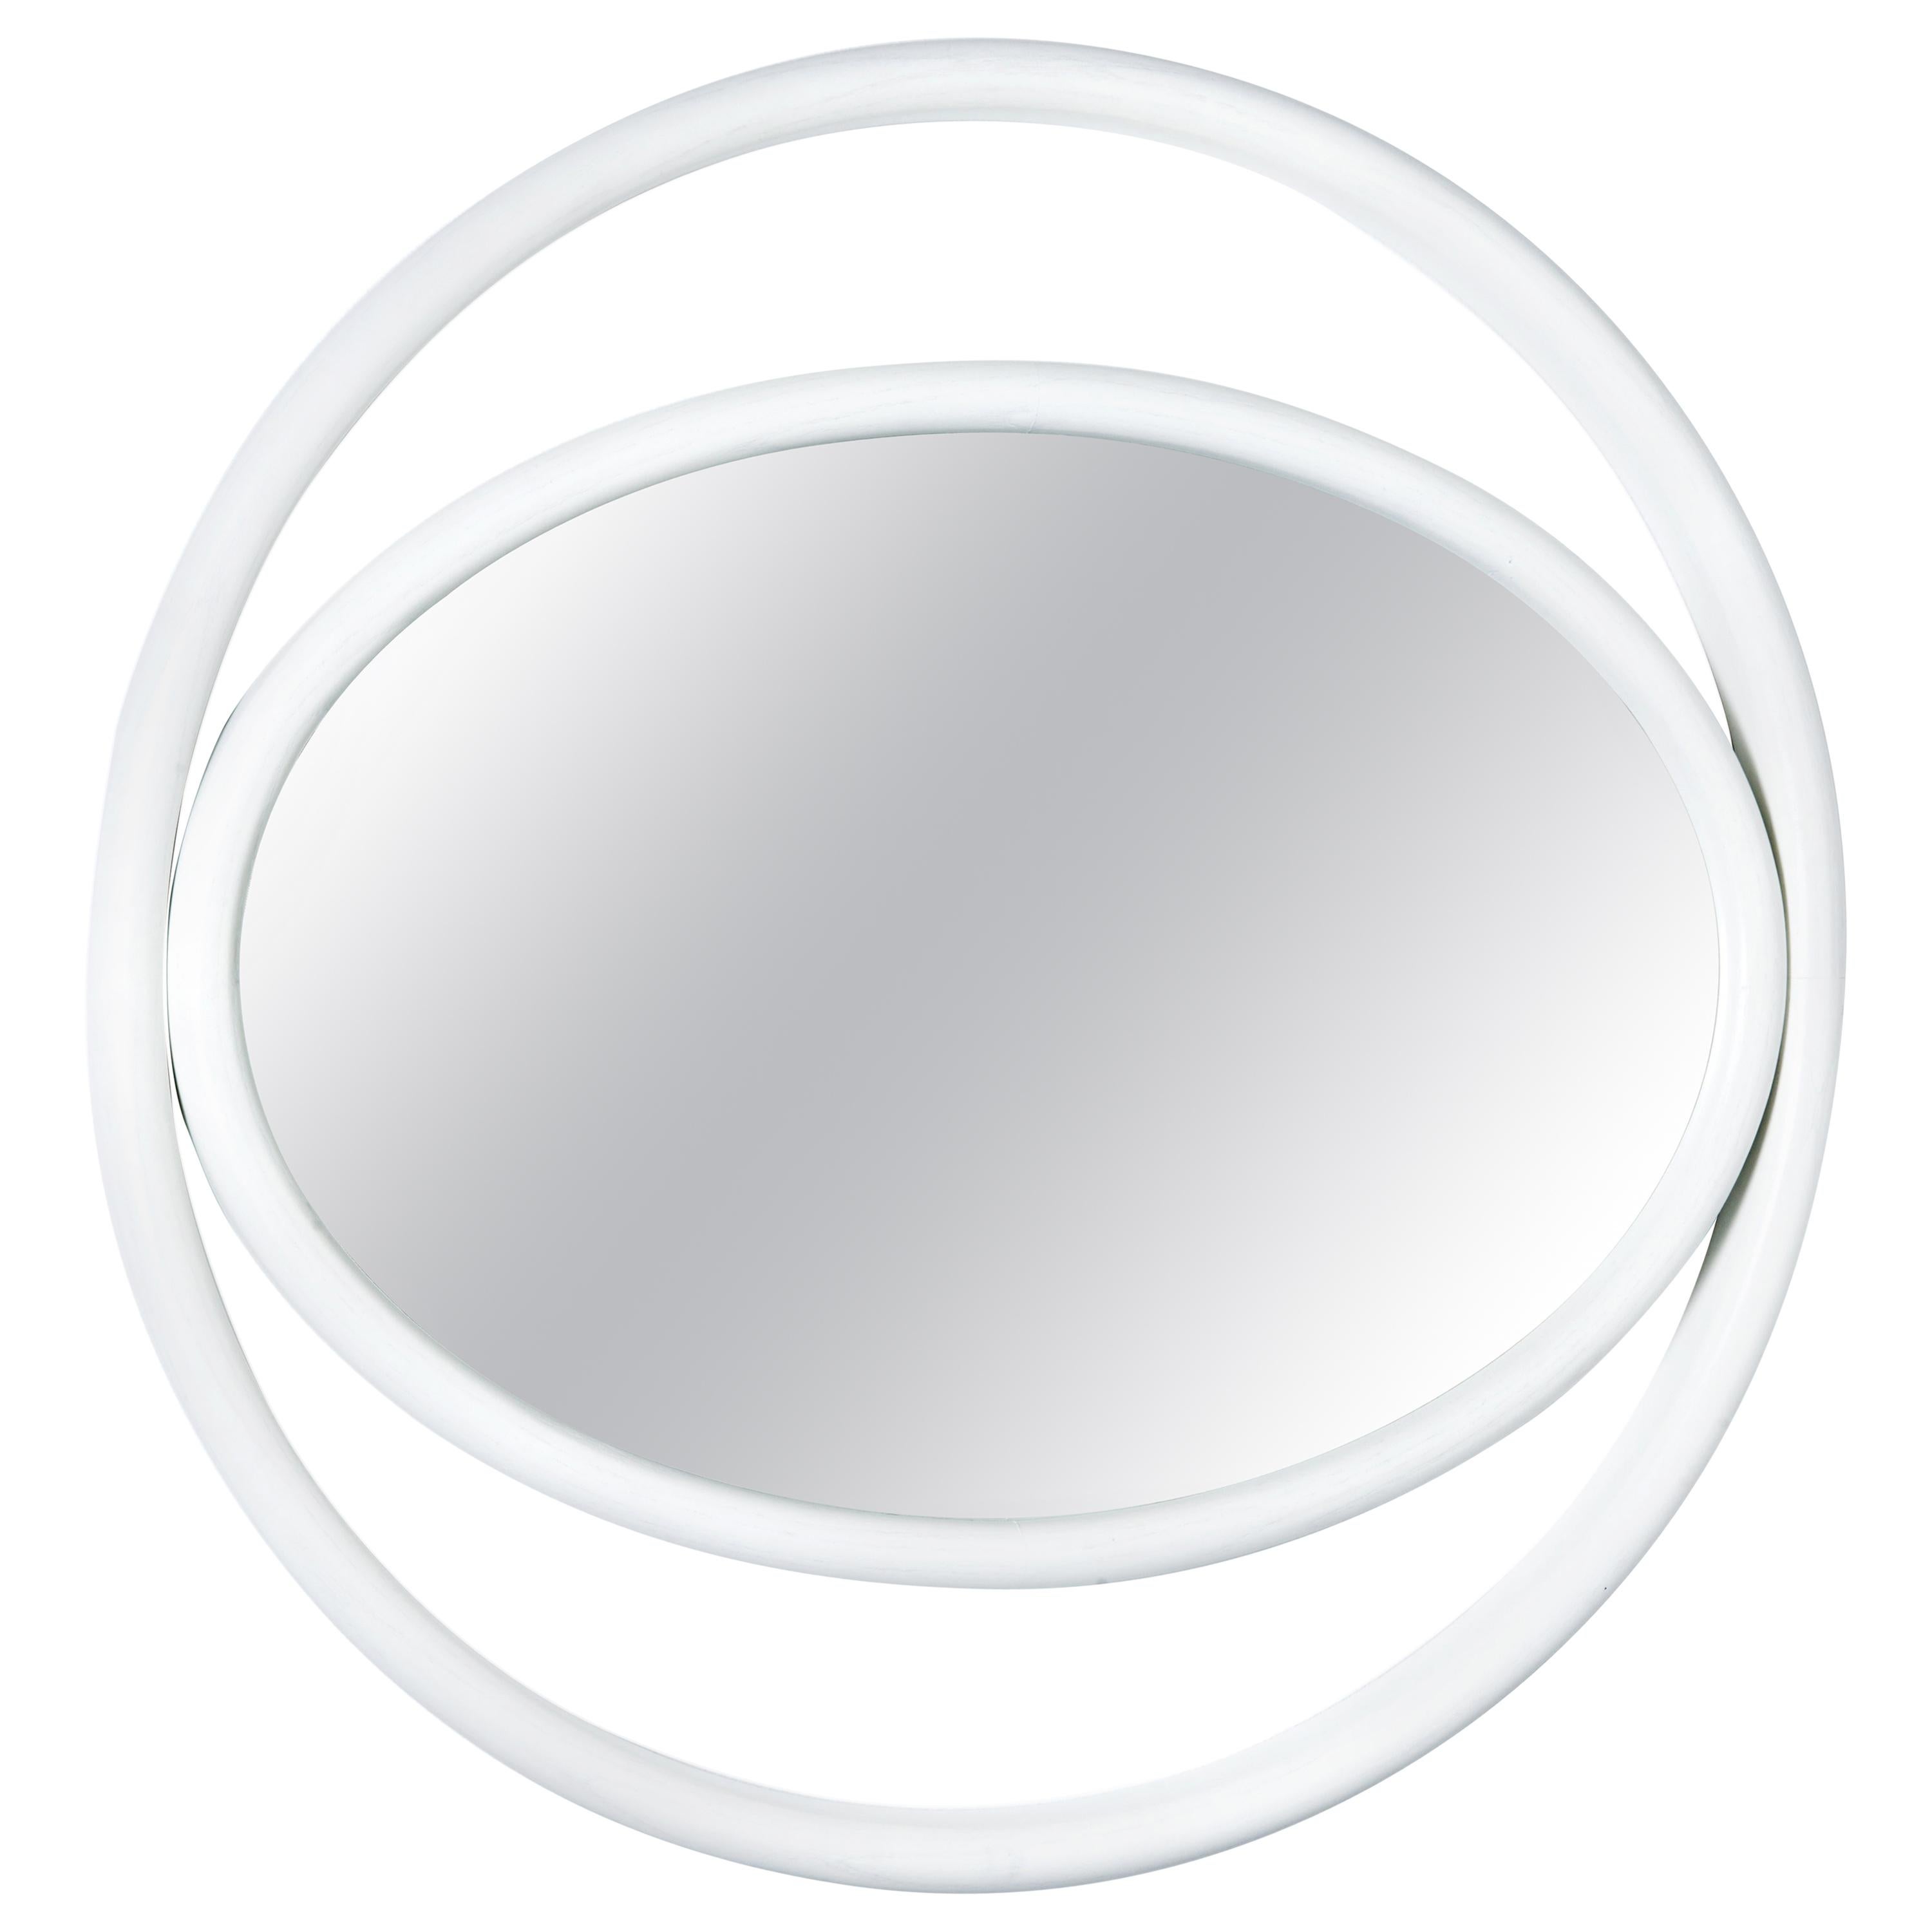 Gebrüder Thonet Vienna GmbH Eyeshine Large Circular Mirror in White with Frame For Sale